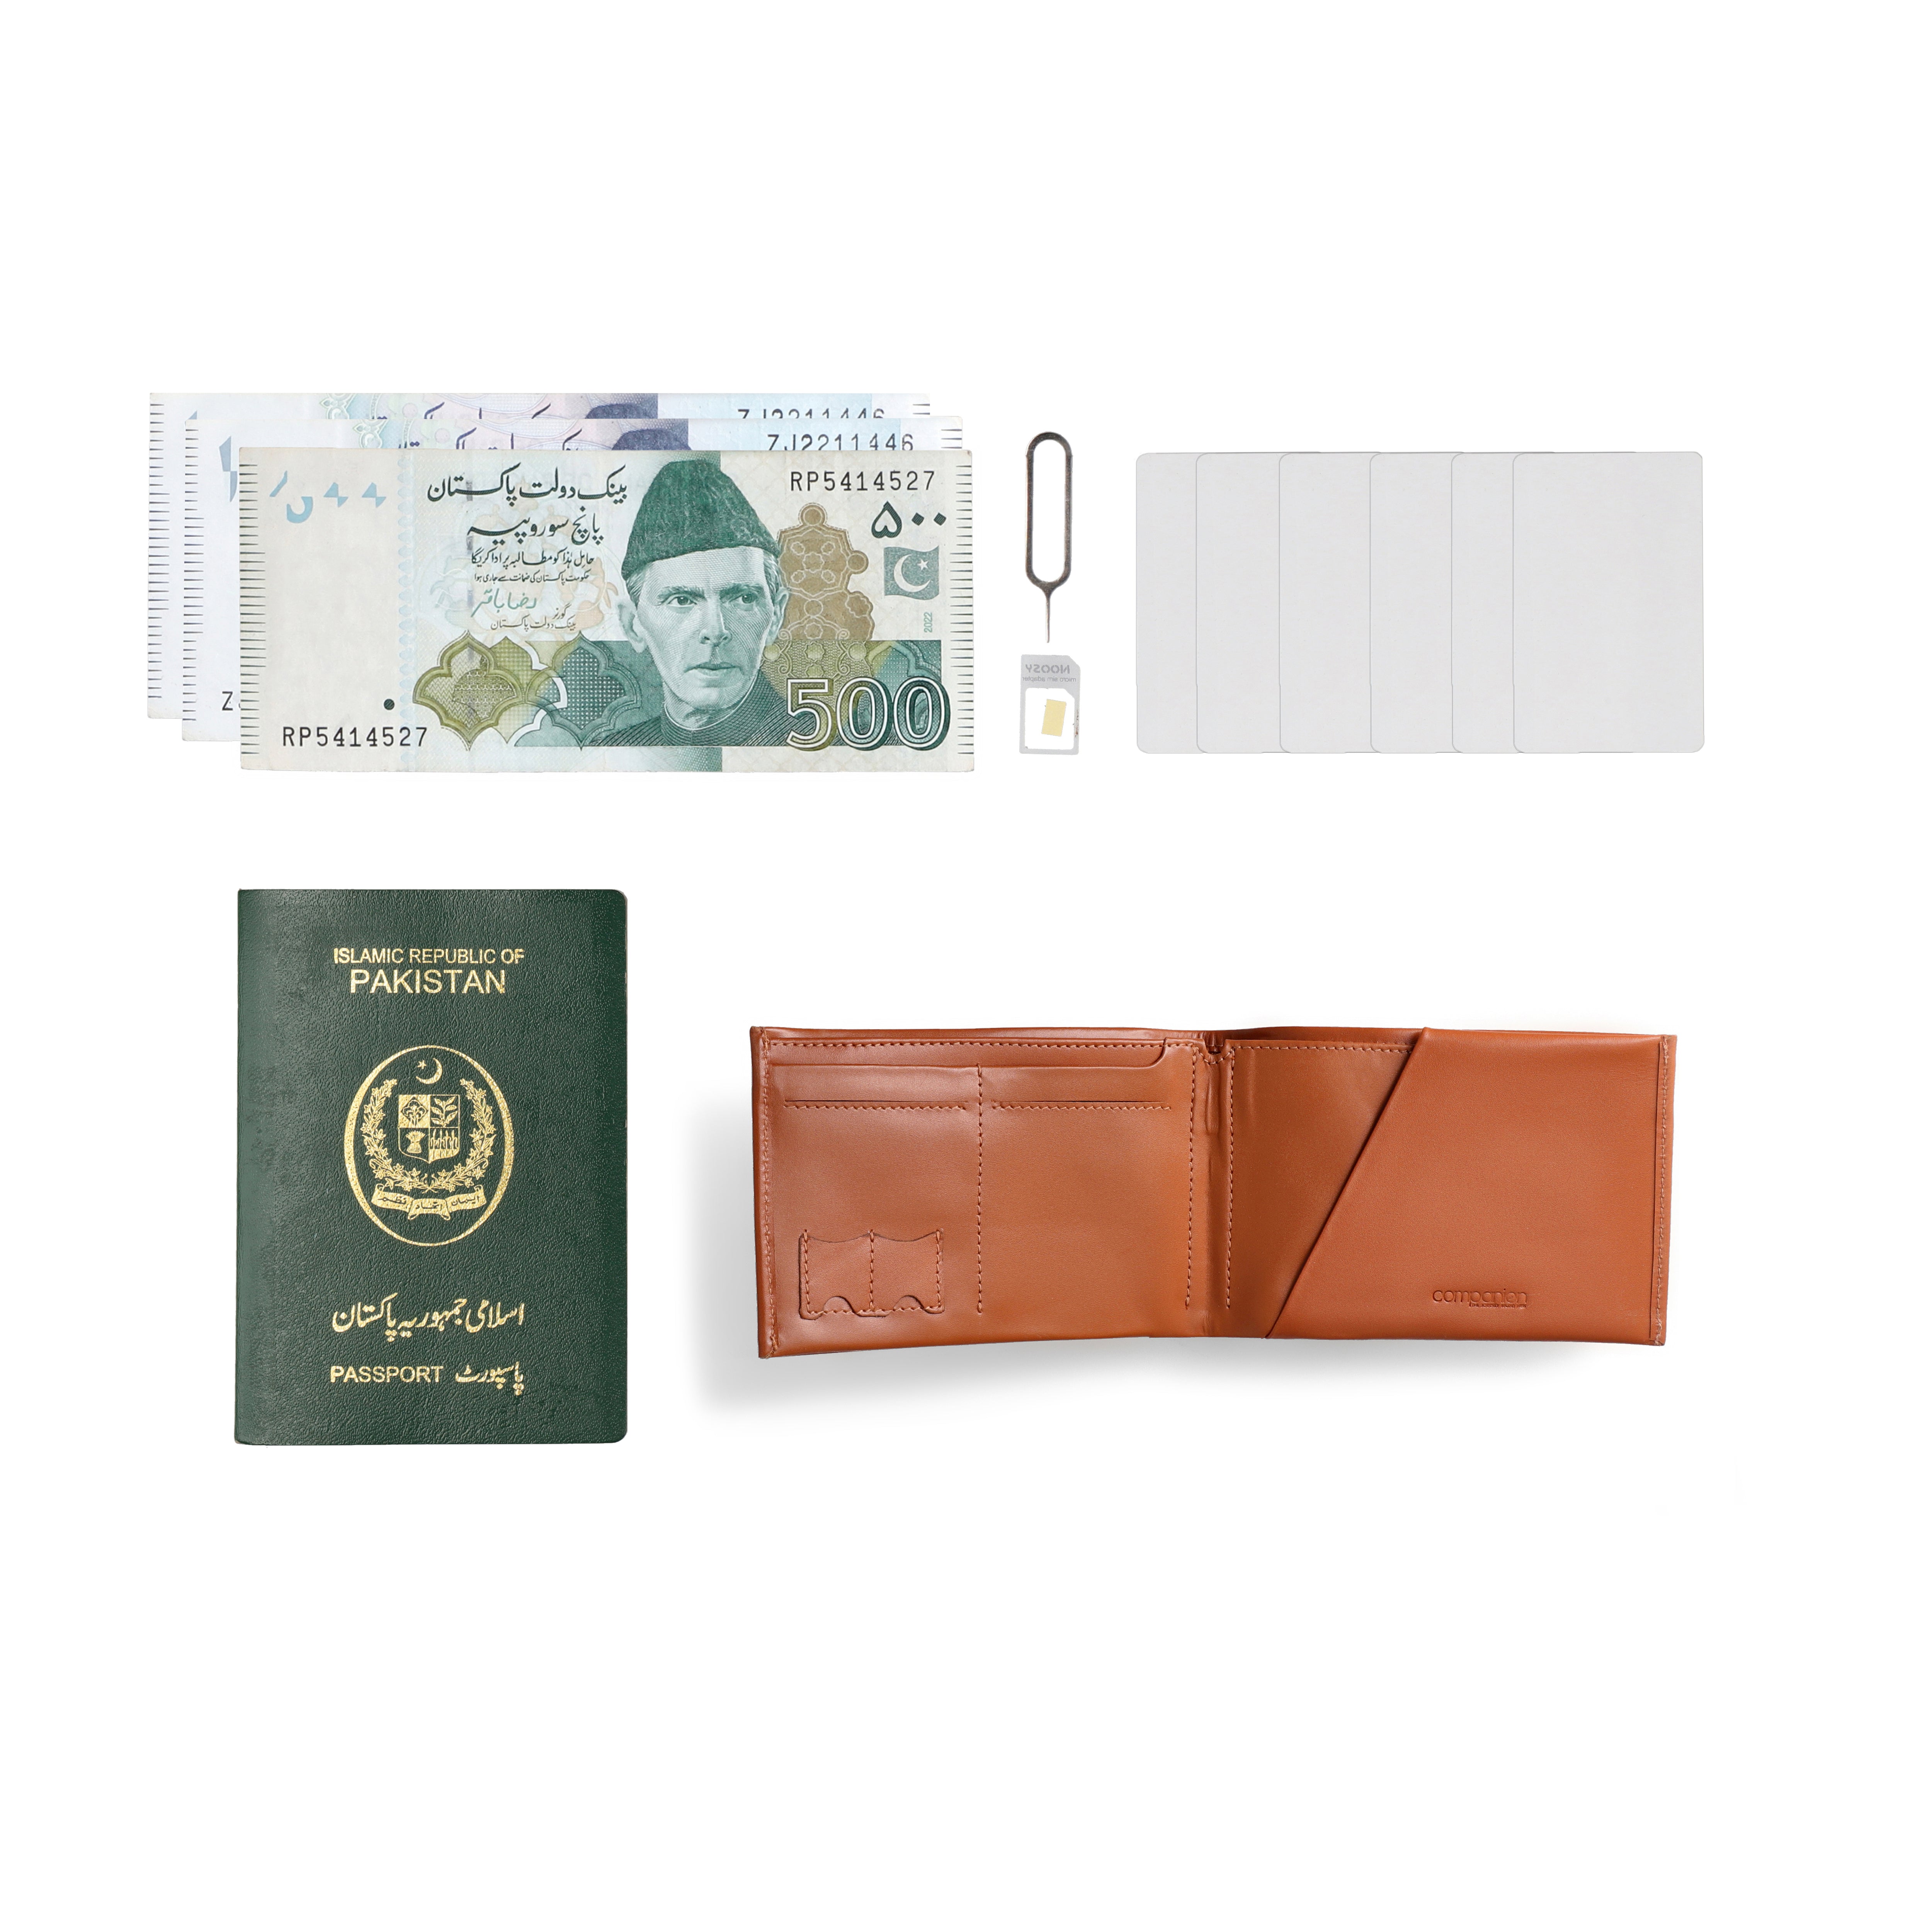 TRAVEX Bi-fold Travel Wallet